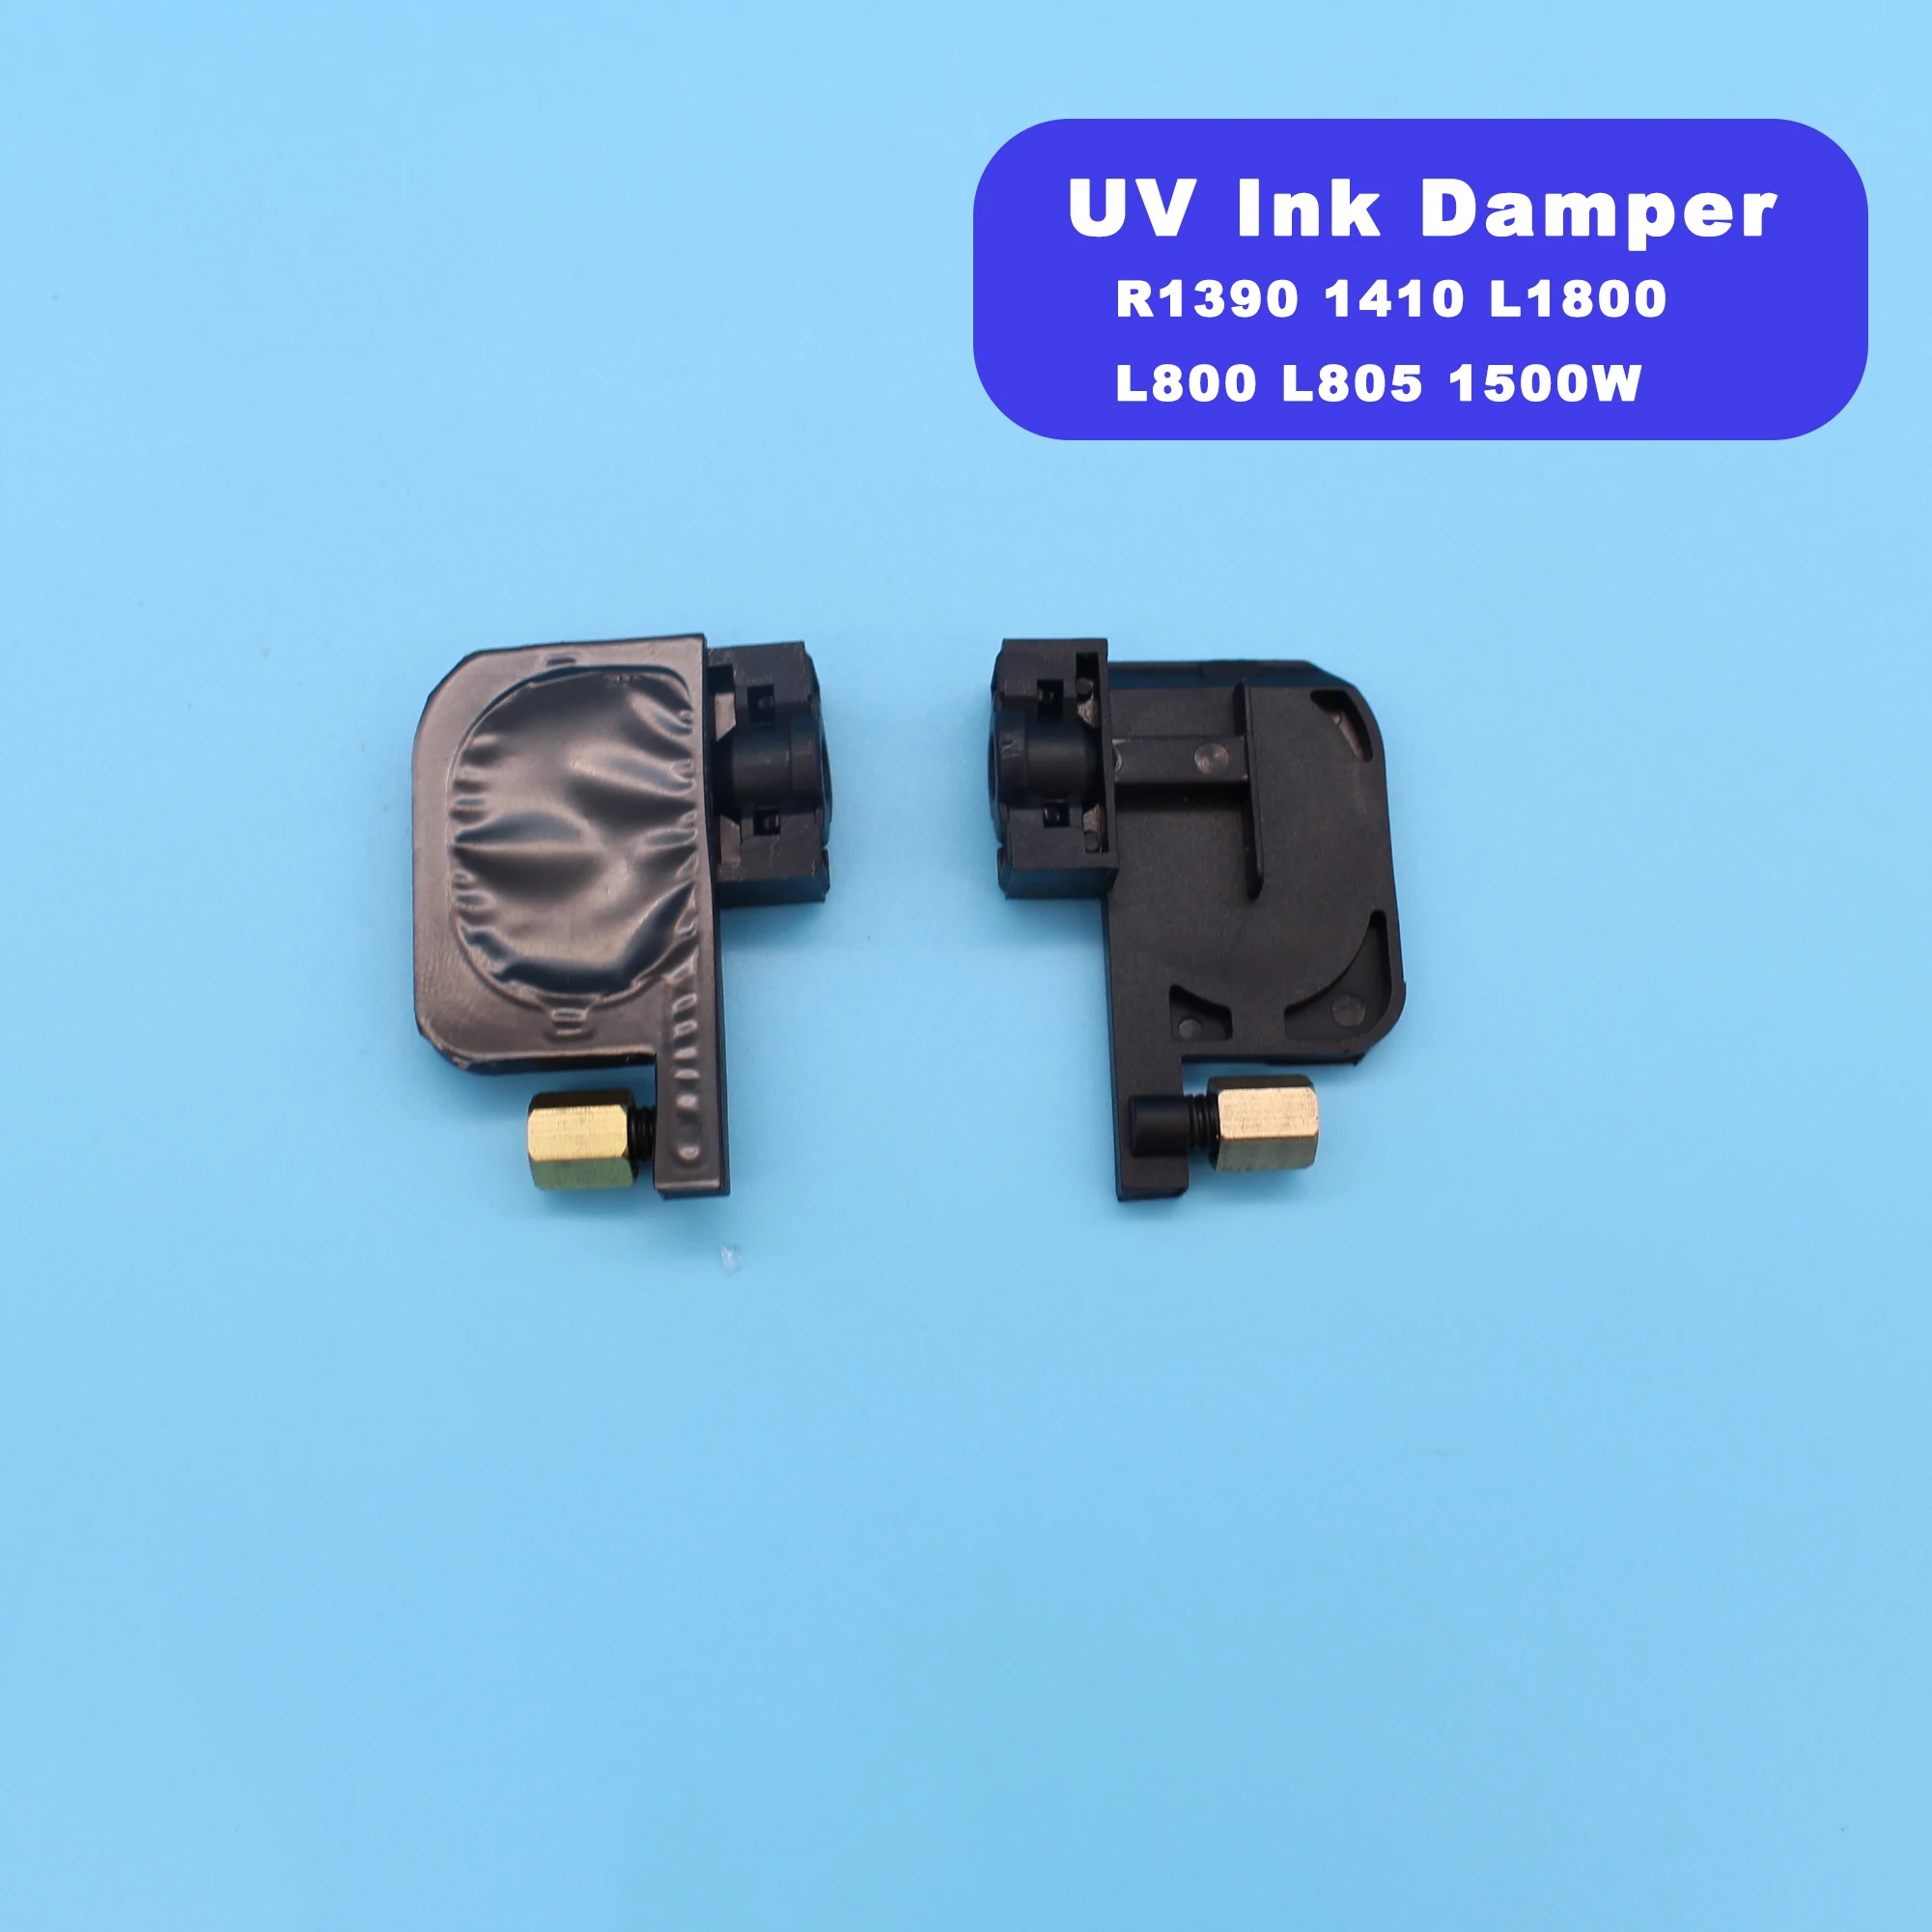 20 PCS UV Ink Damper square for Epson L1800 L800 L805 L850 A50 T50 T60 1400 1410 1390 1430 1500W Printer Dumper Filter